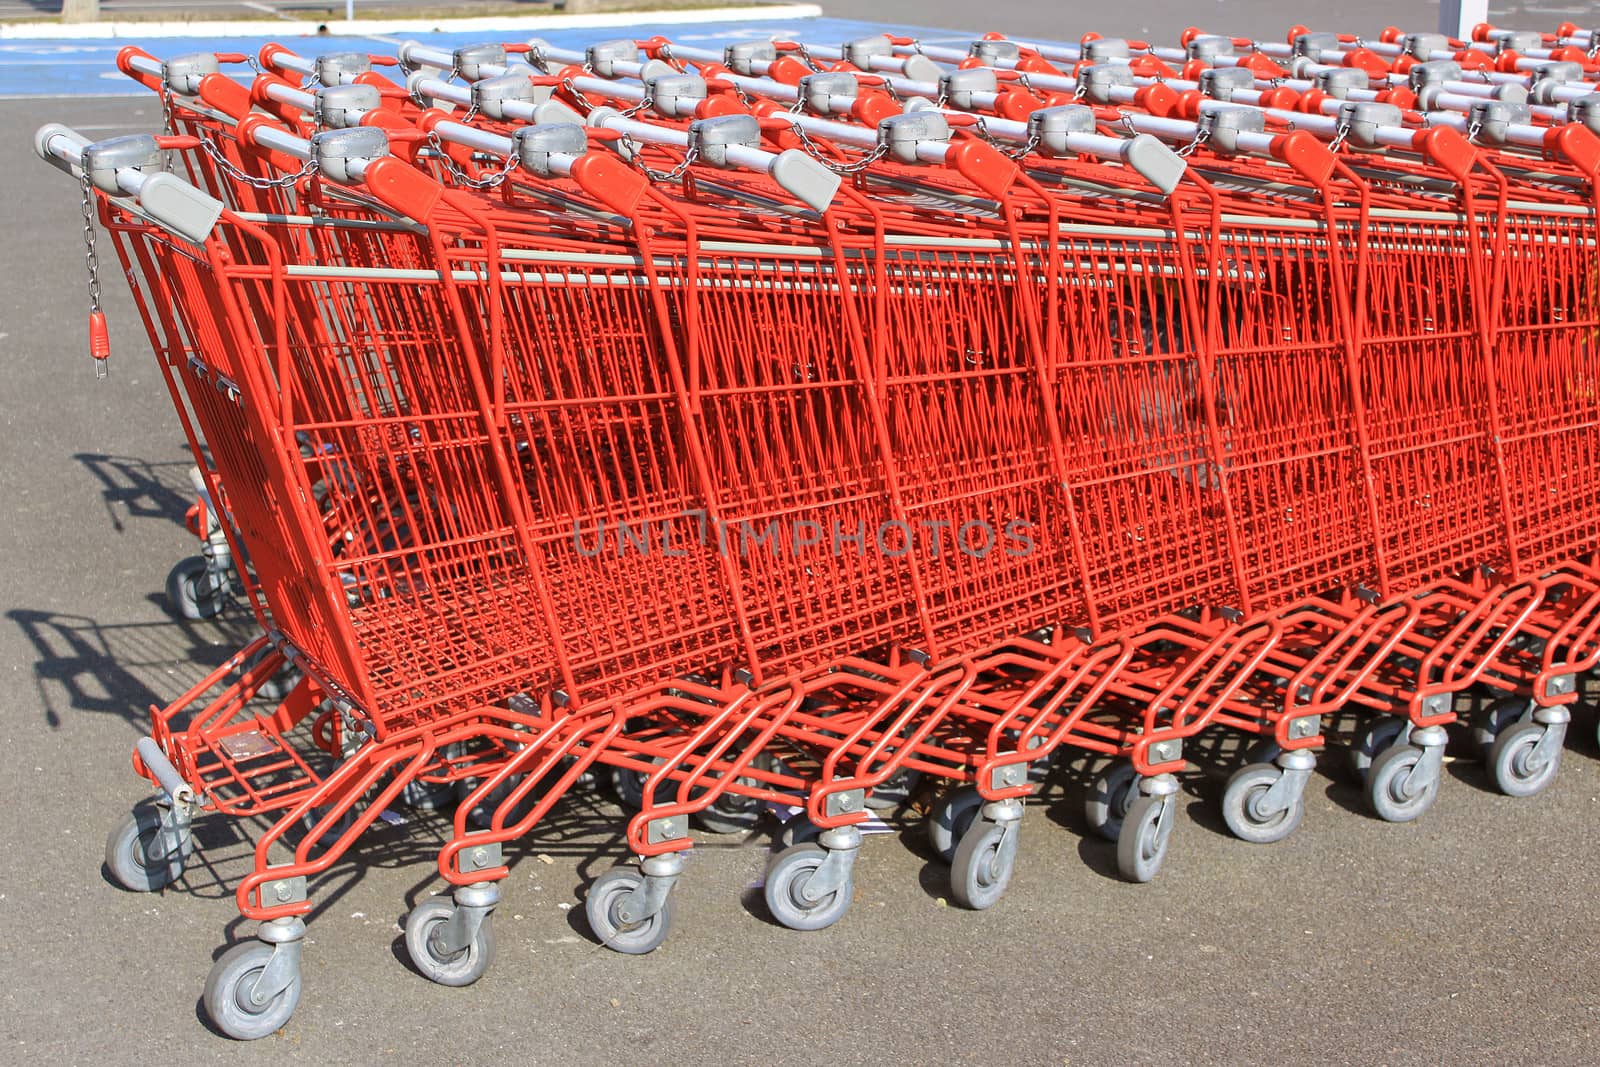 Supermarket trolleys by 26amandine